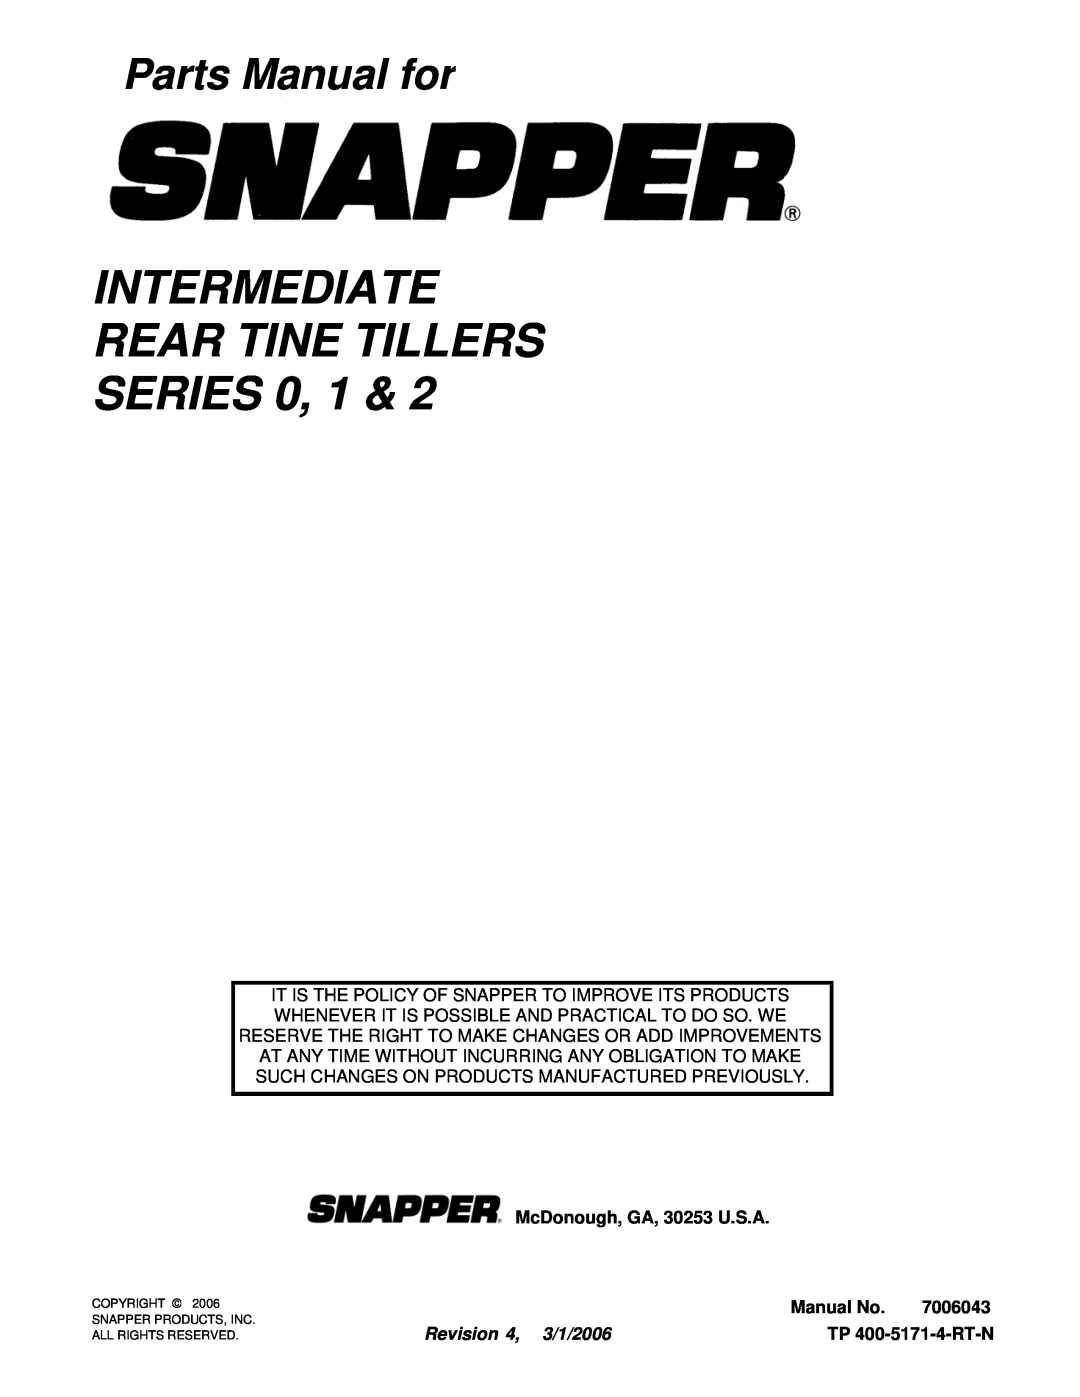 Snapper IR4002B manual TP 400-5171-4-RT-N, INTERMEDIATE REAR TINE TILLERS SERIES 0, 1, Parts Manual for, Manual No, 7006043 